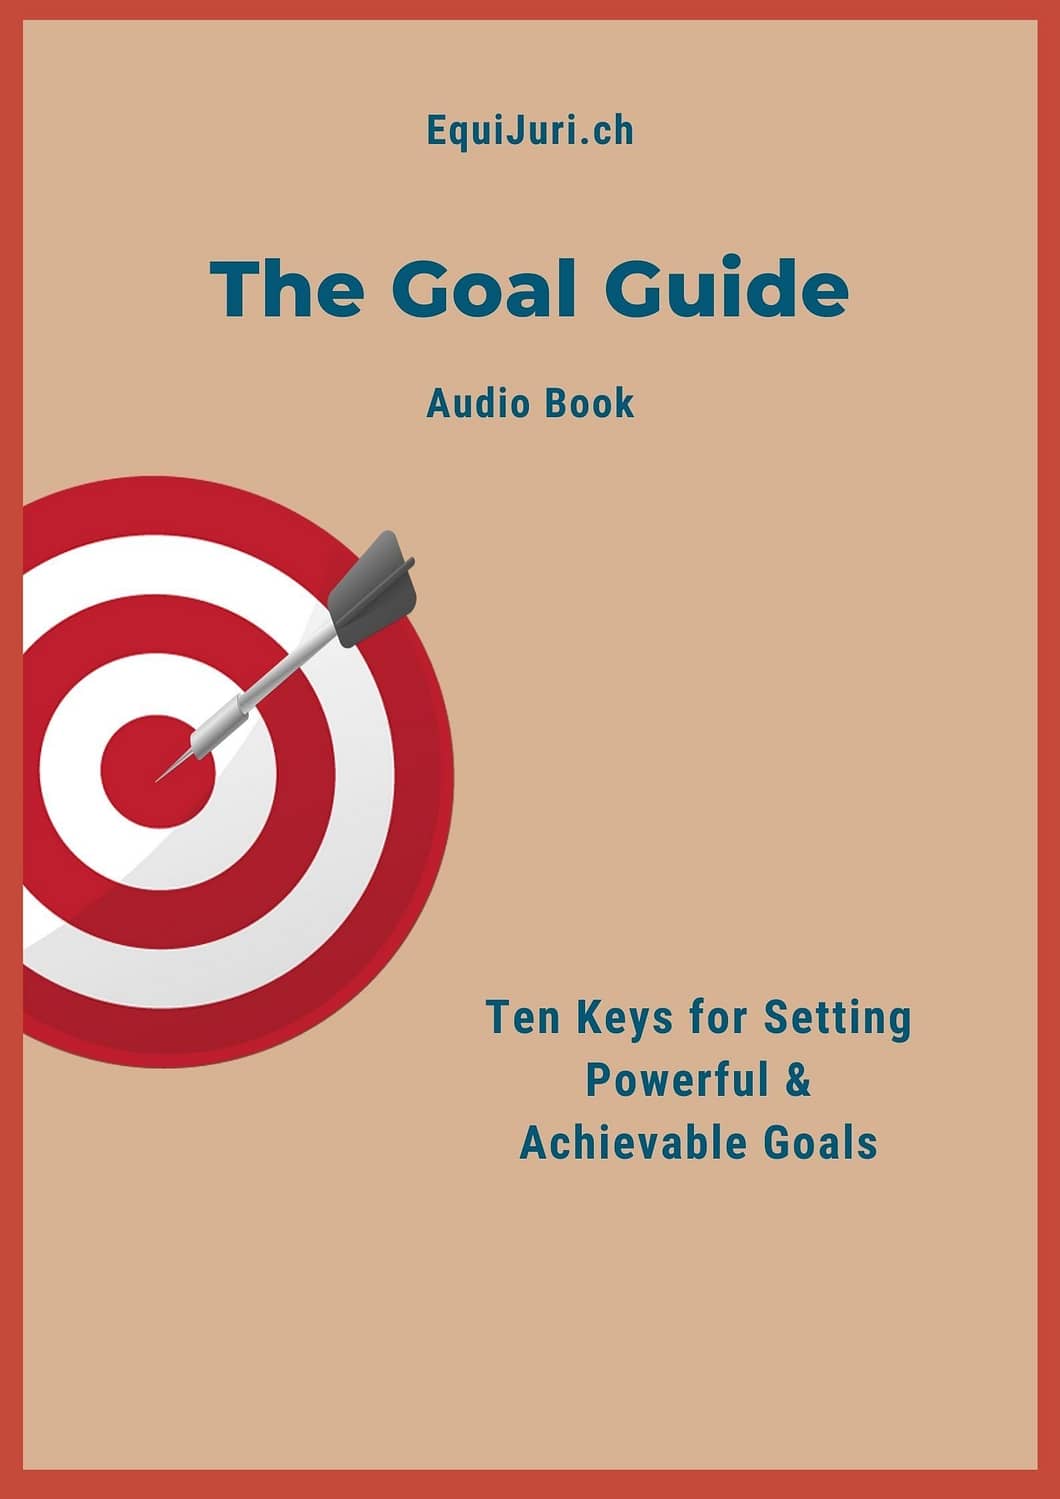 The Goal Guide EquiJuri